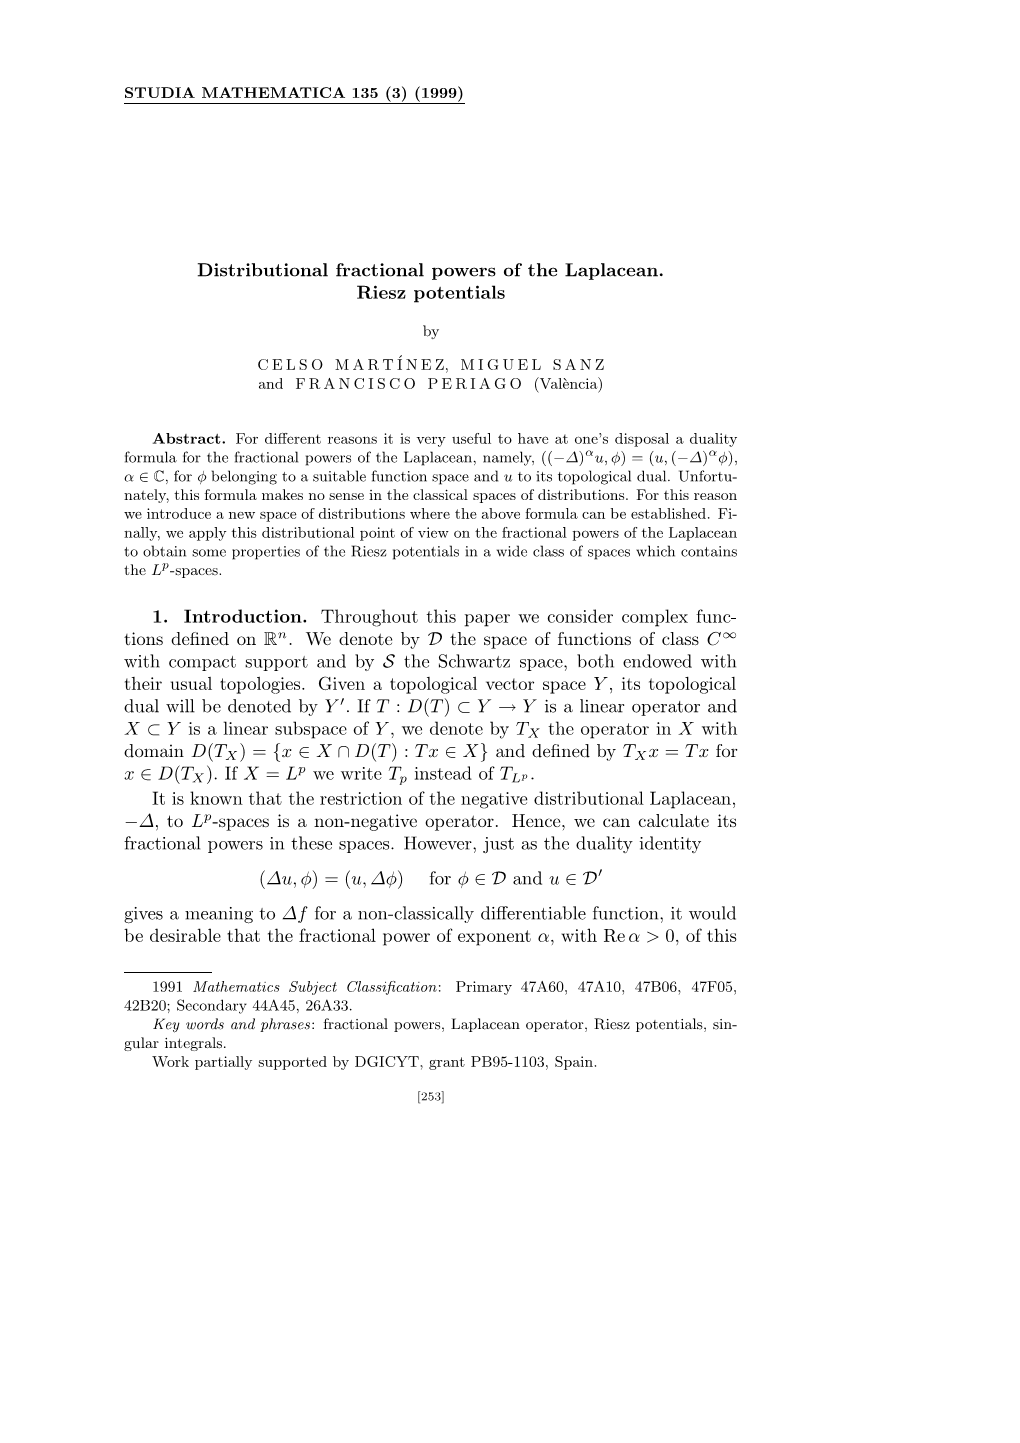 Distributional Fractional Powers of the Laplacean. Riesz Potentials 1